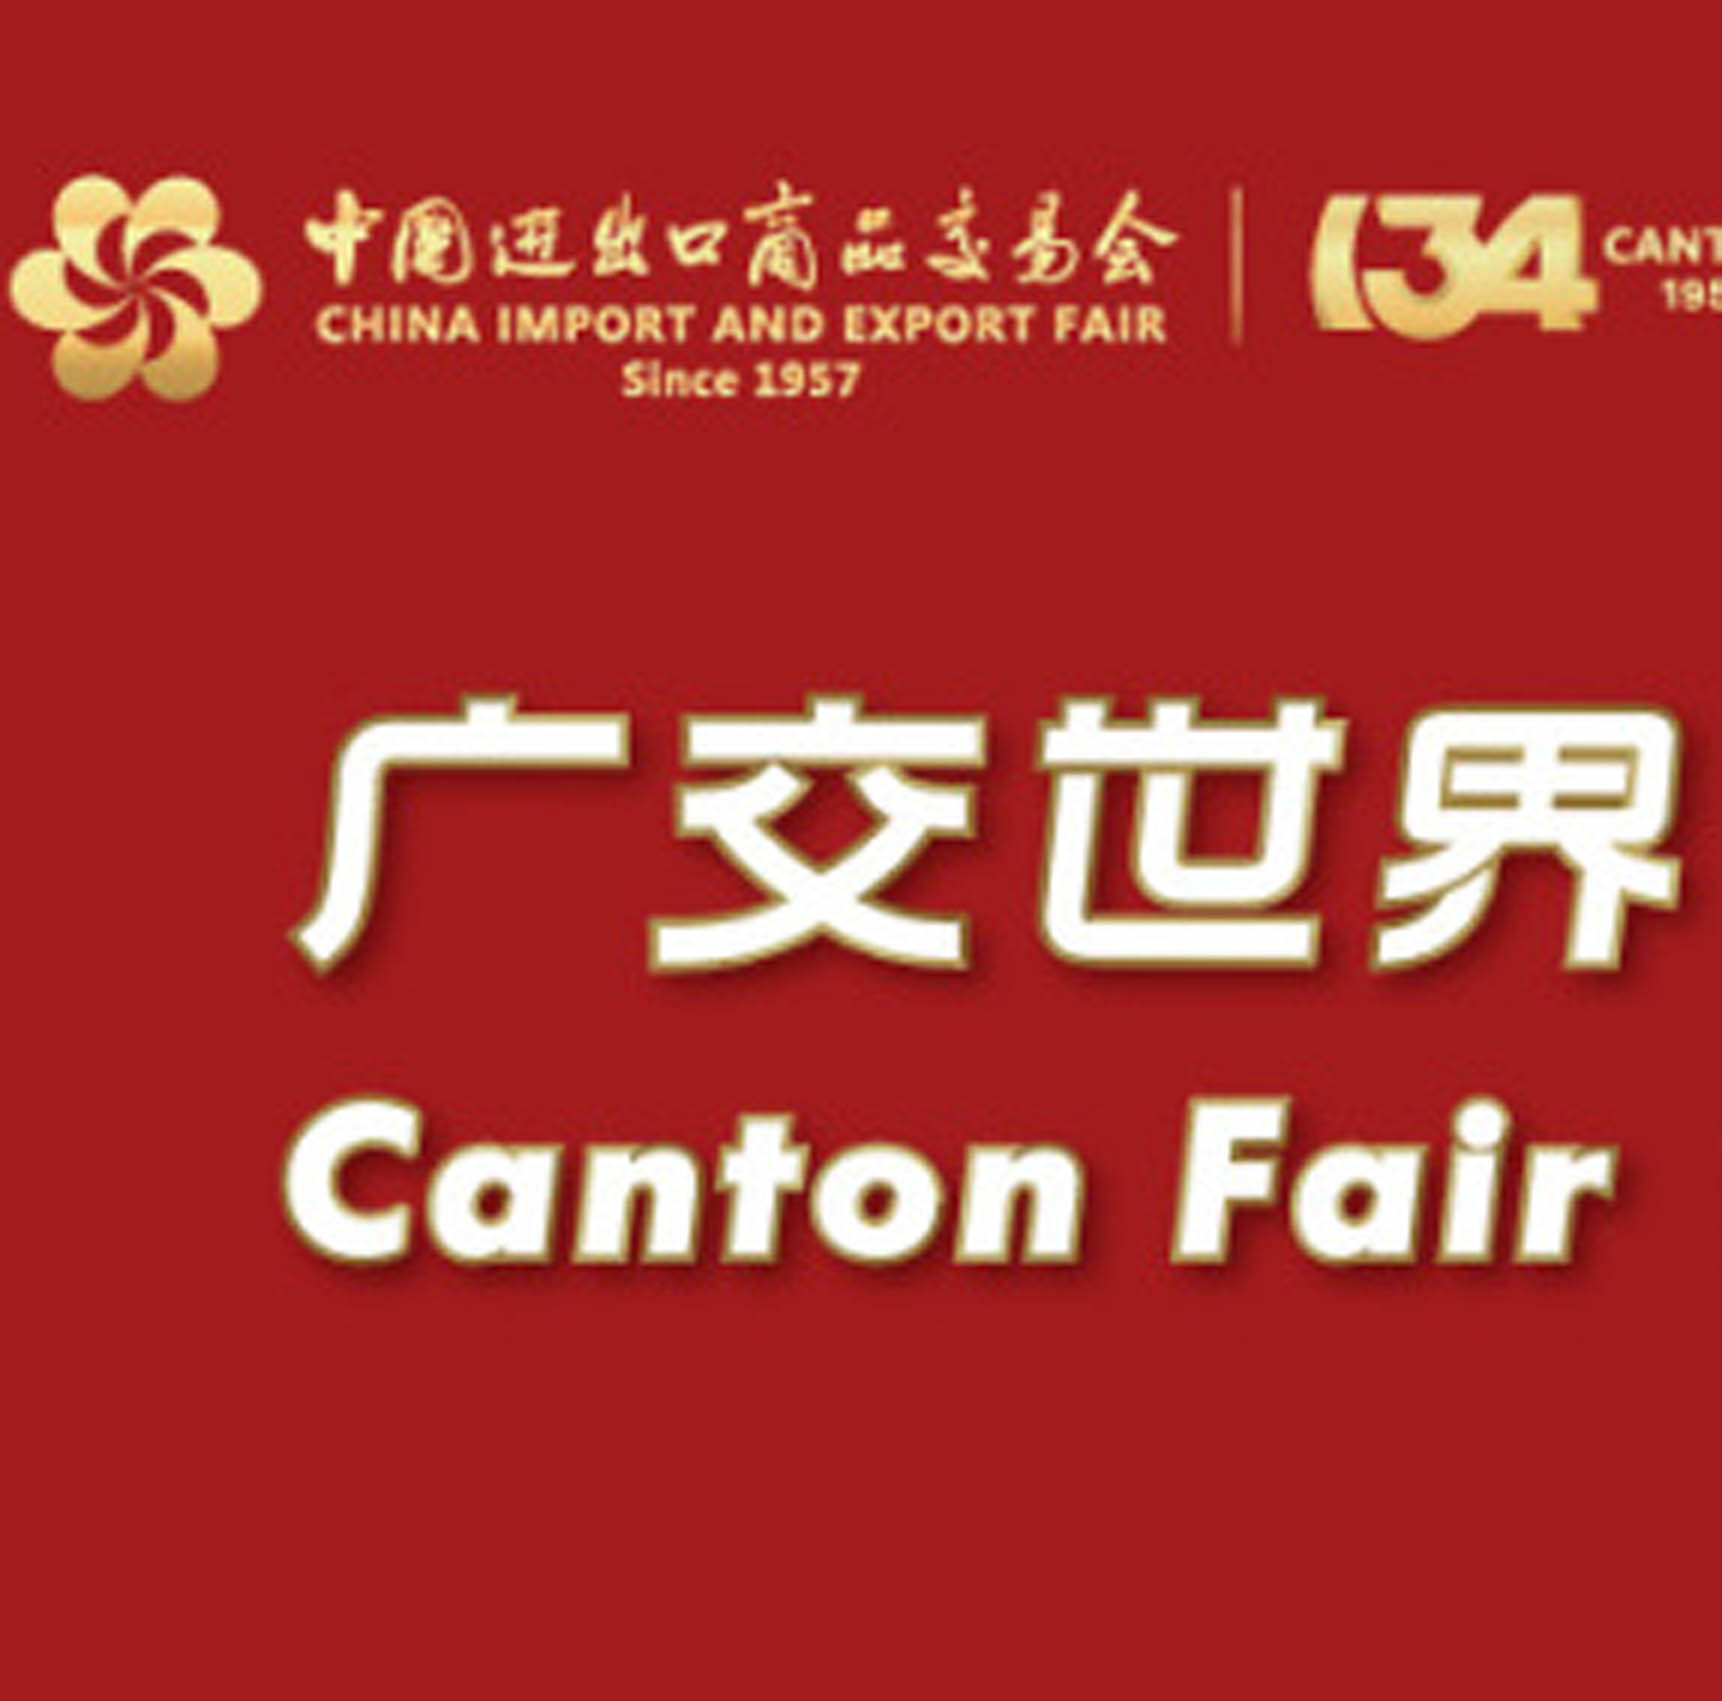 Let us meet at Canton Fair Booth NO.:2.1H28